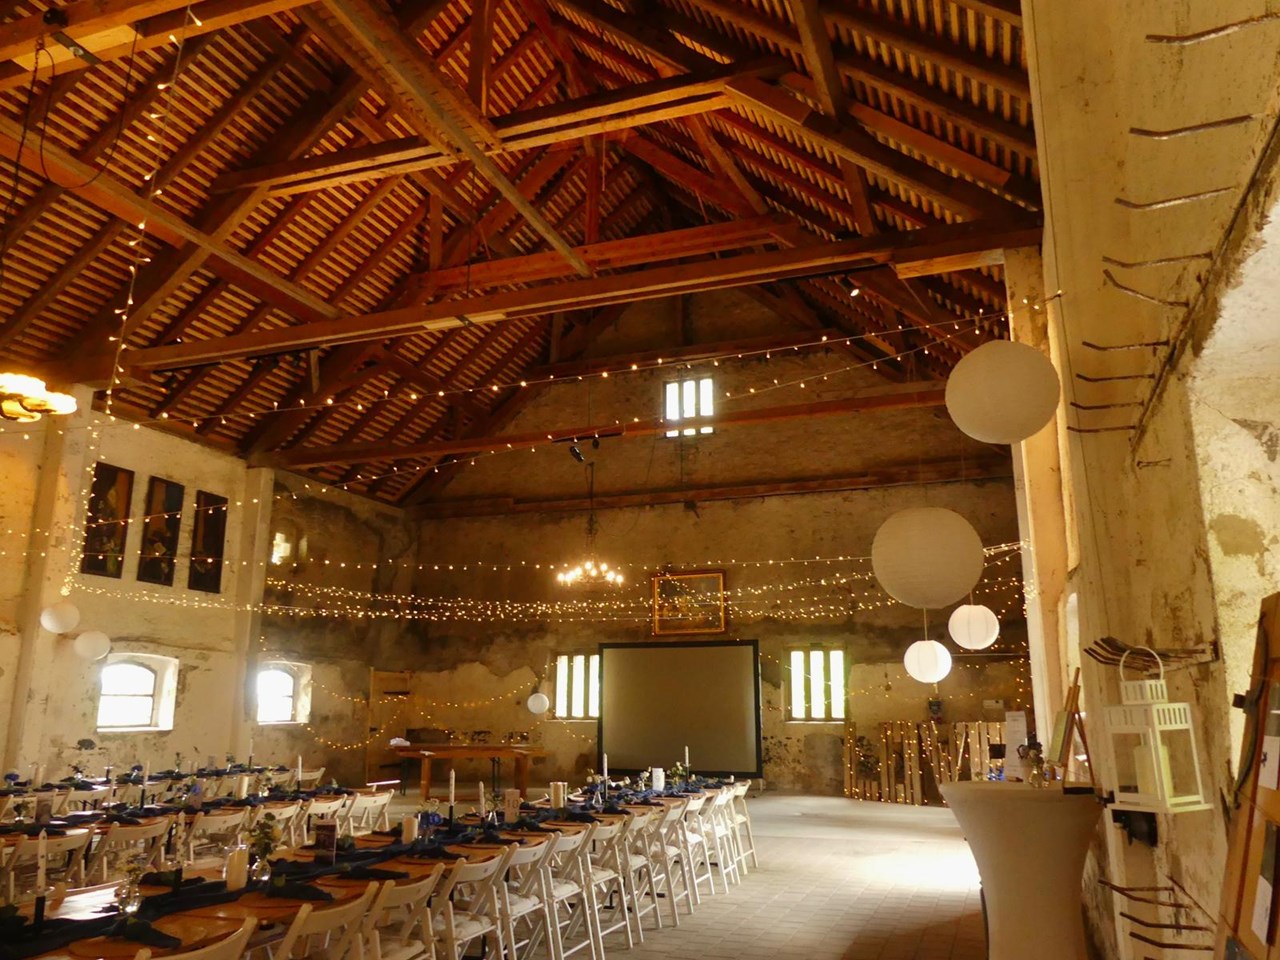 Rittergut Mosisgreut  Information about the banquet halls Large festival barn